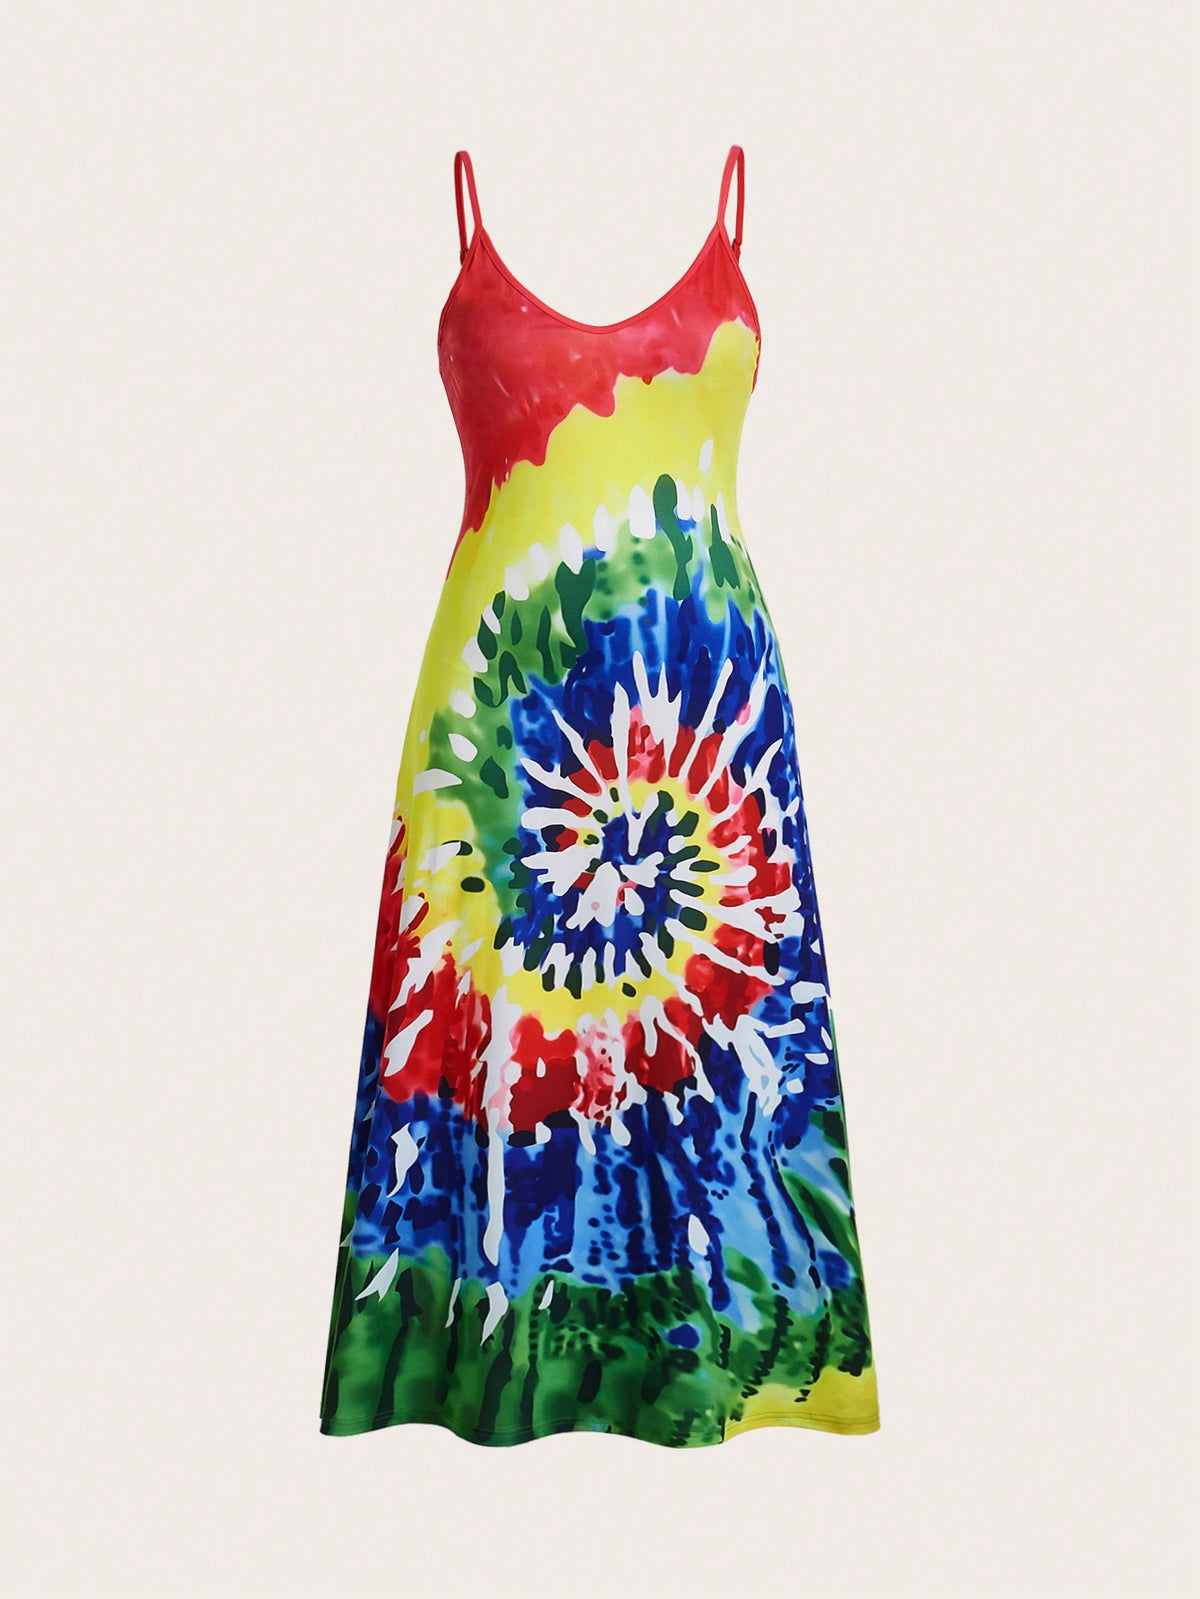 VCAY Plus Size Women Tie Dye Casual Summer Beach Cami Dress